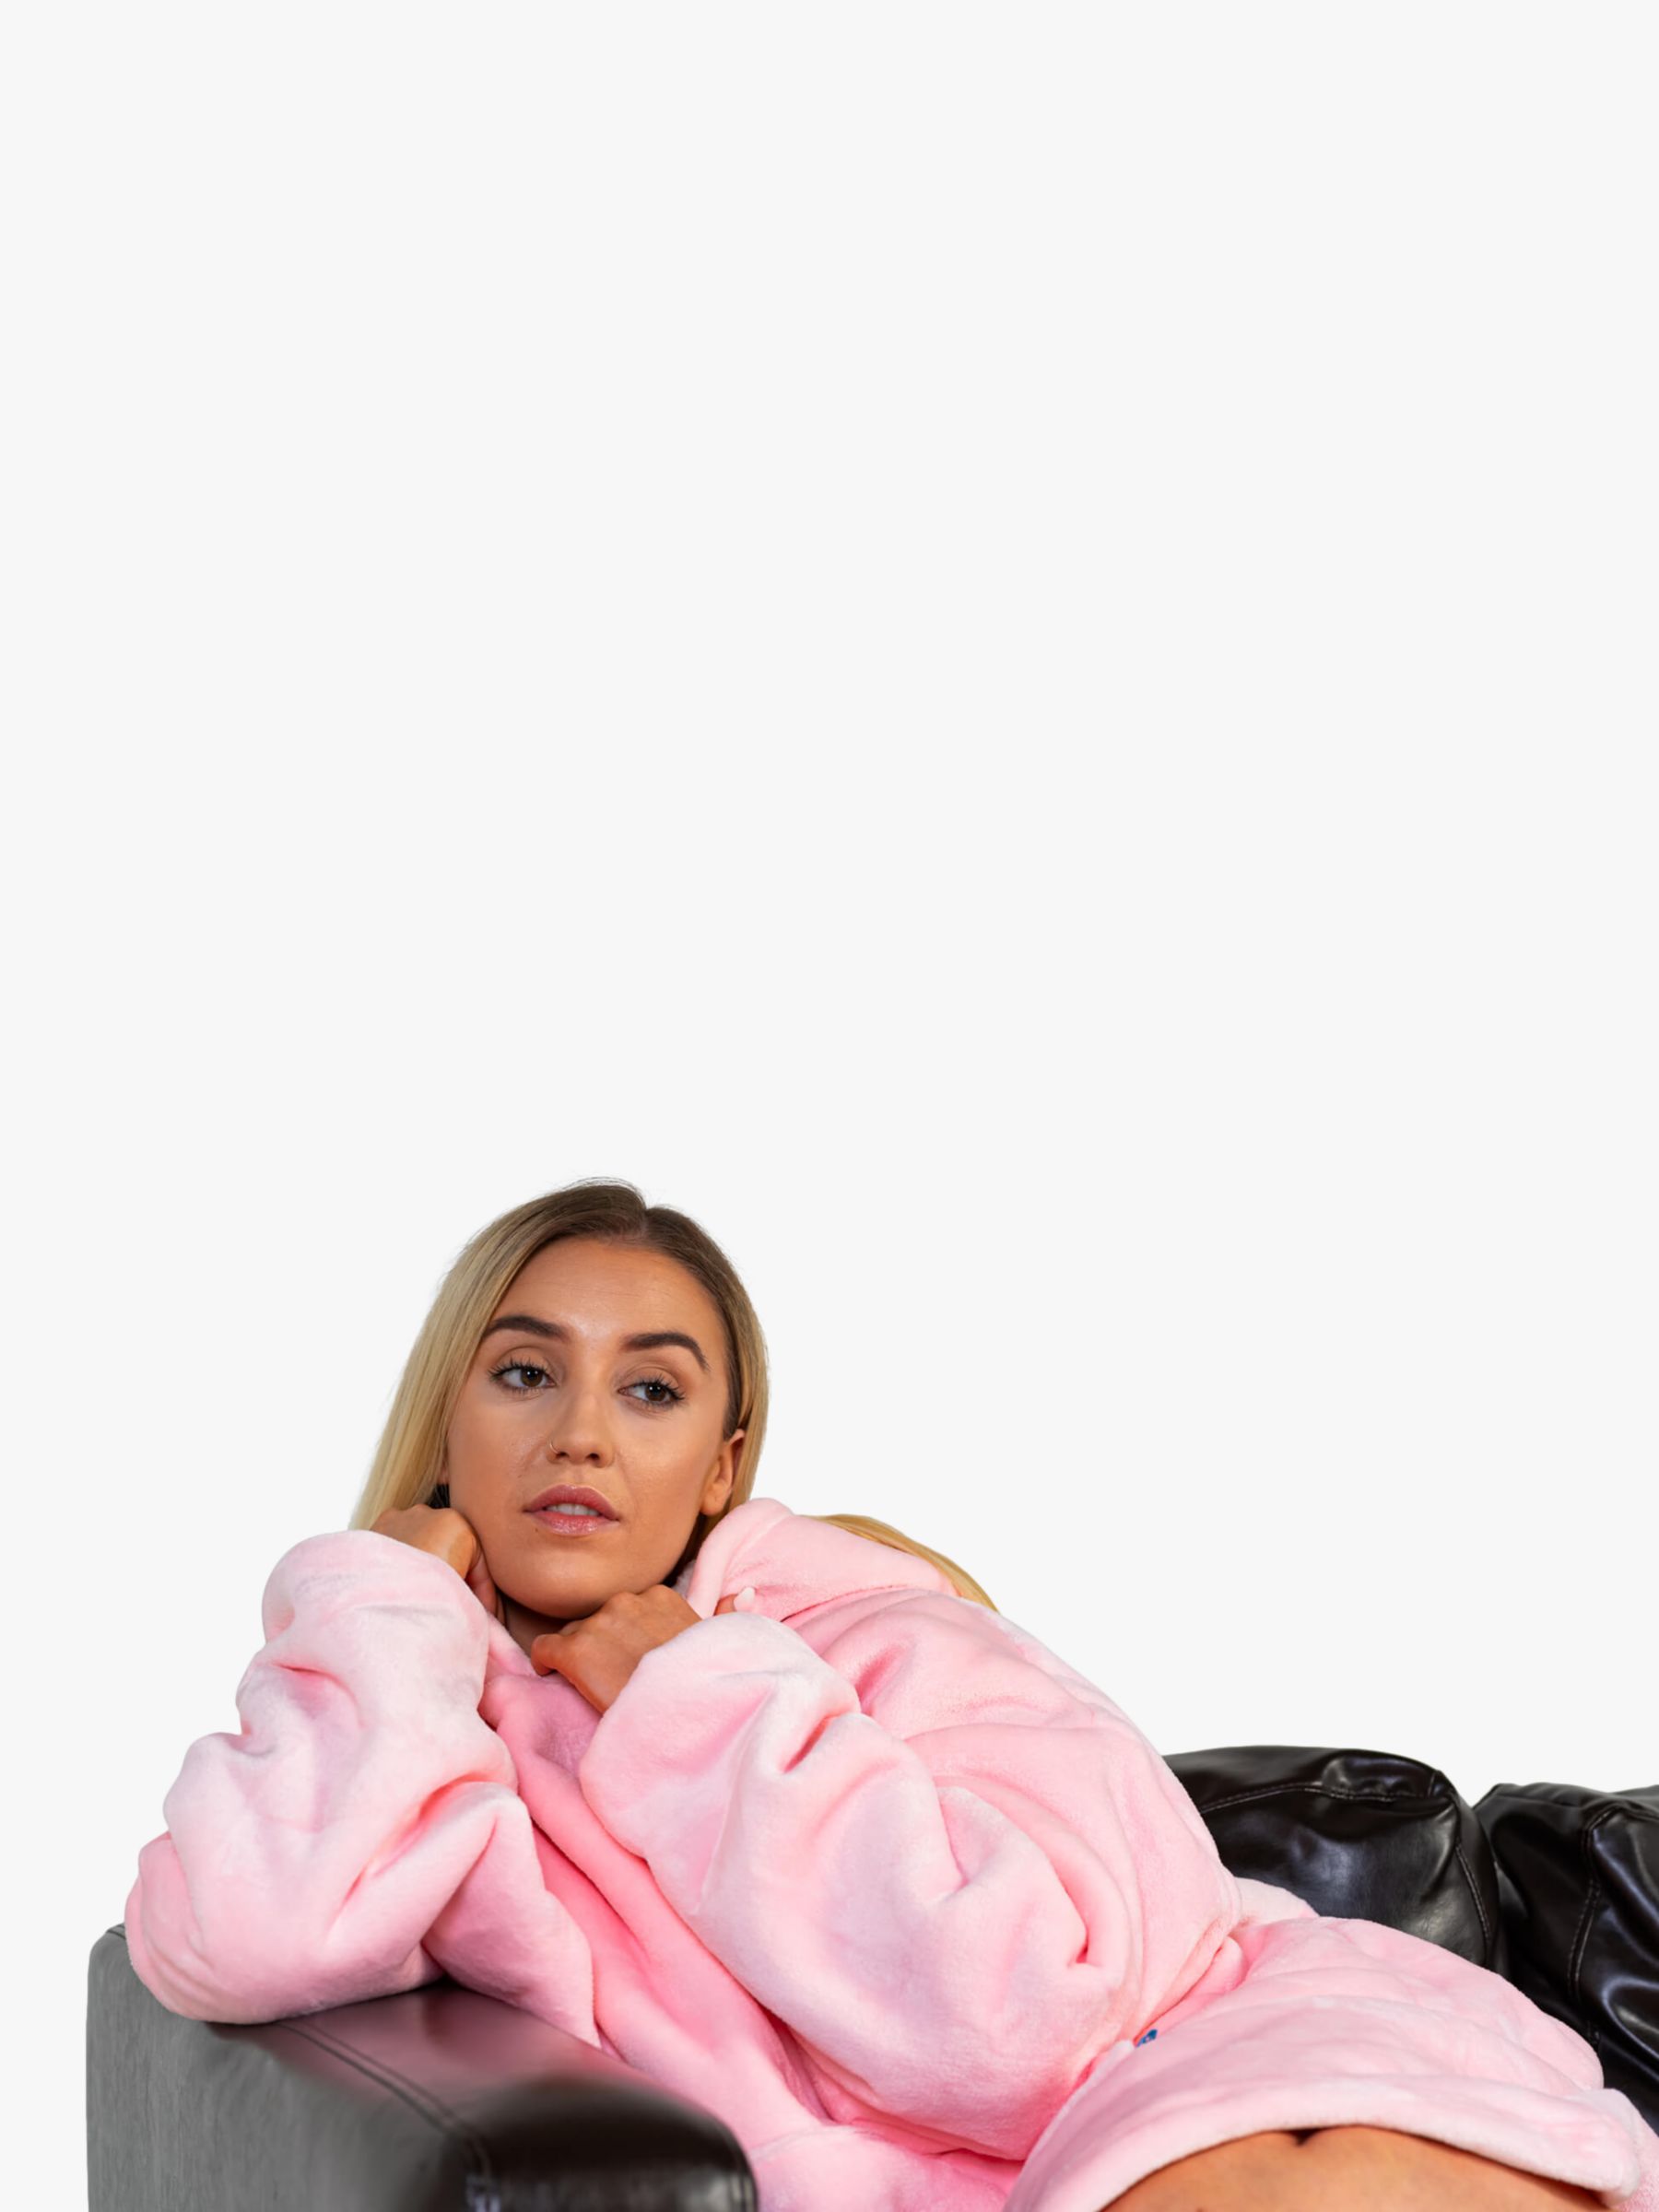 Ony Unisex Sherpa Lined Fleece Hoodie Blanket, Pink/White, One Size